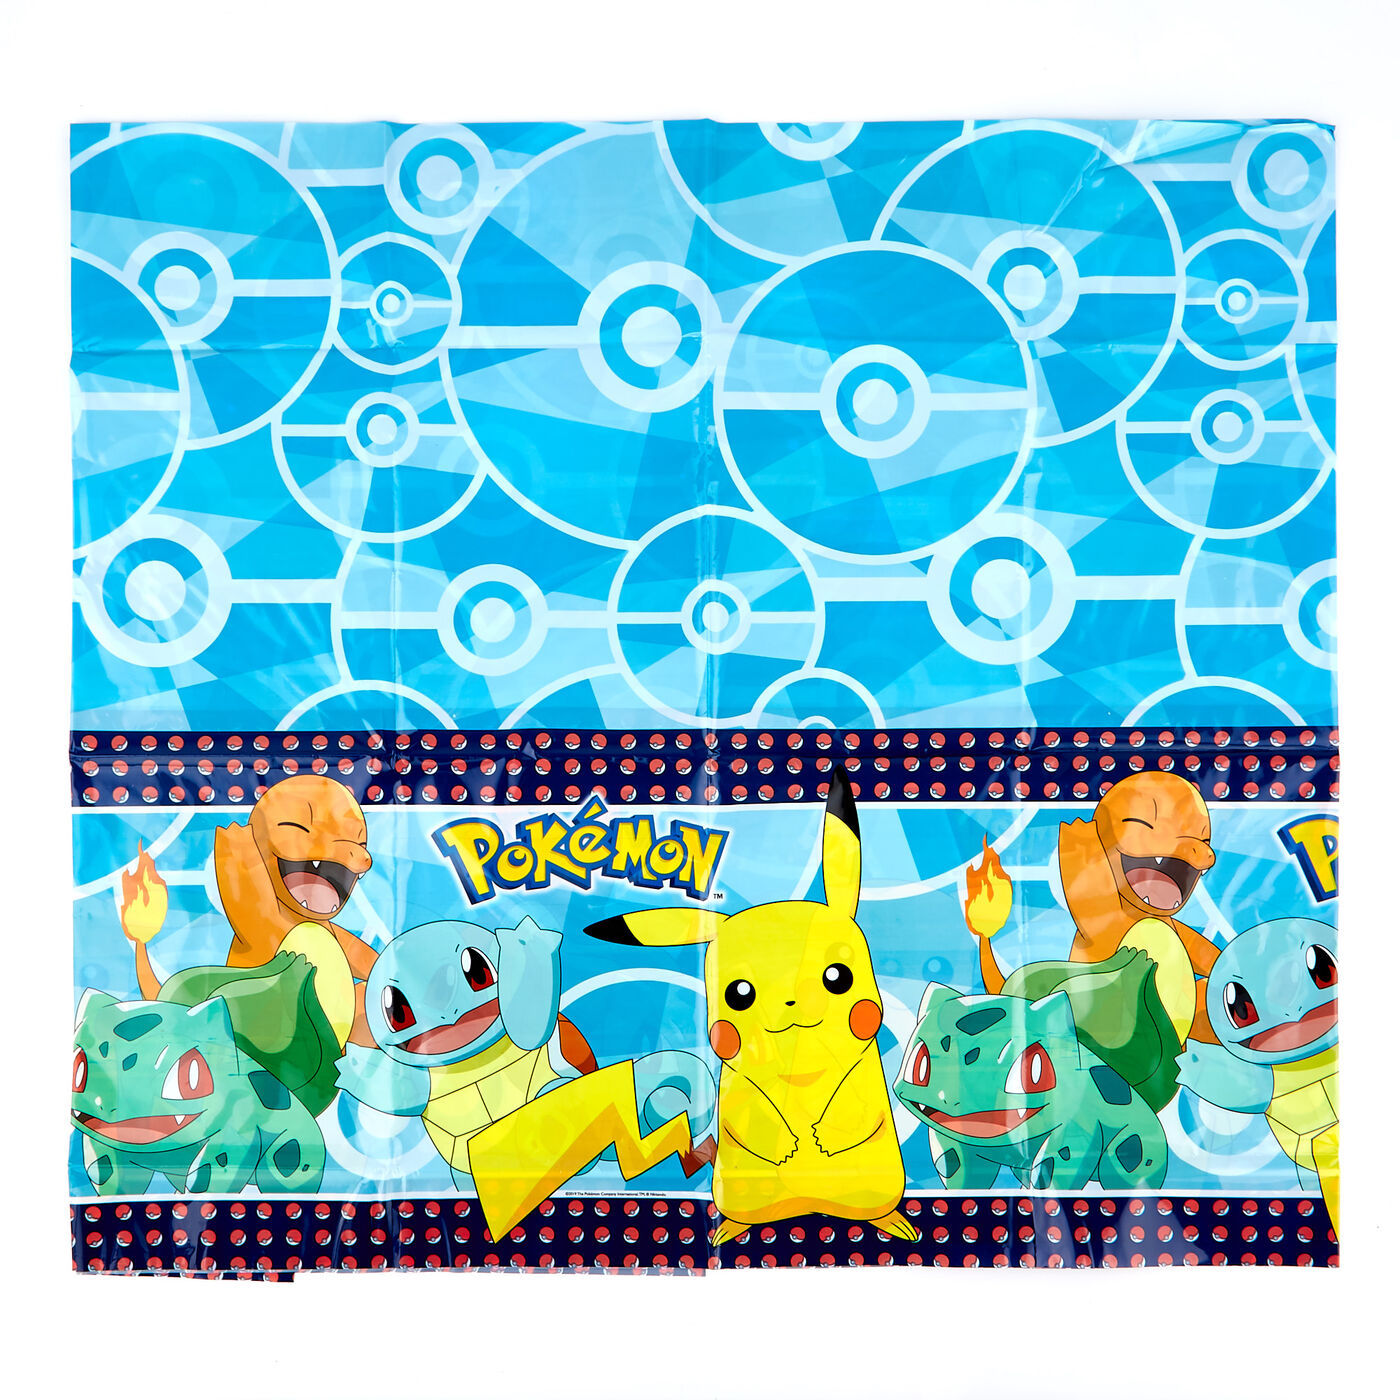  Pokémon Party Supplies and Decoration Pack Serves 16